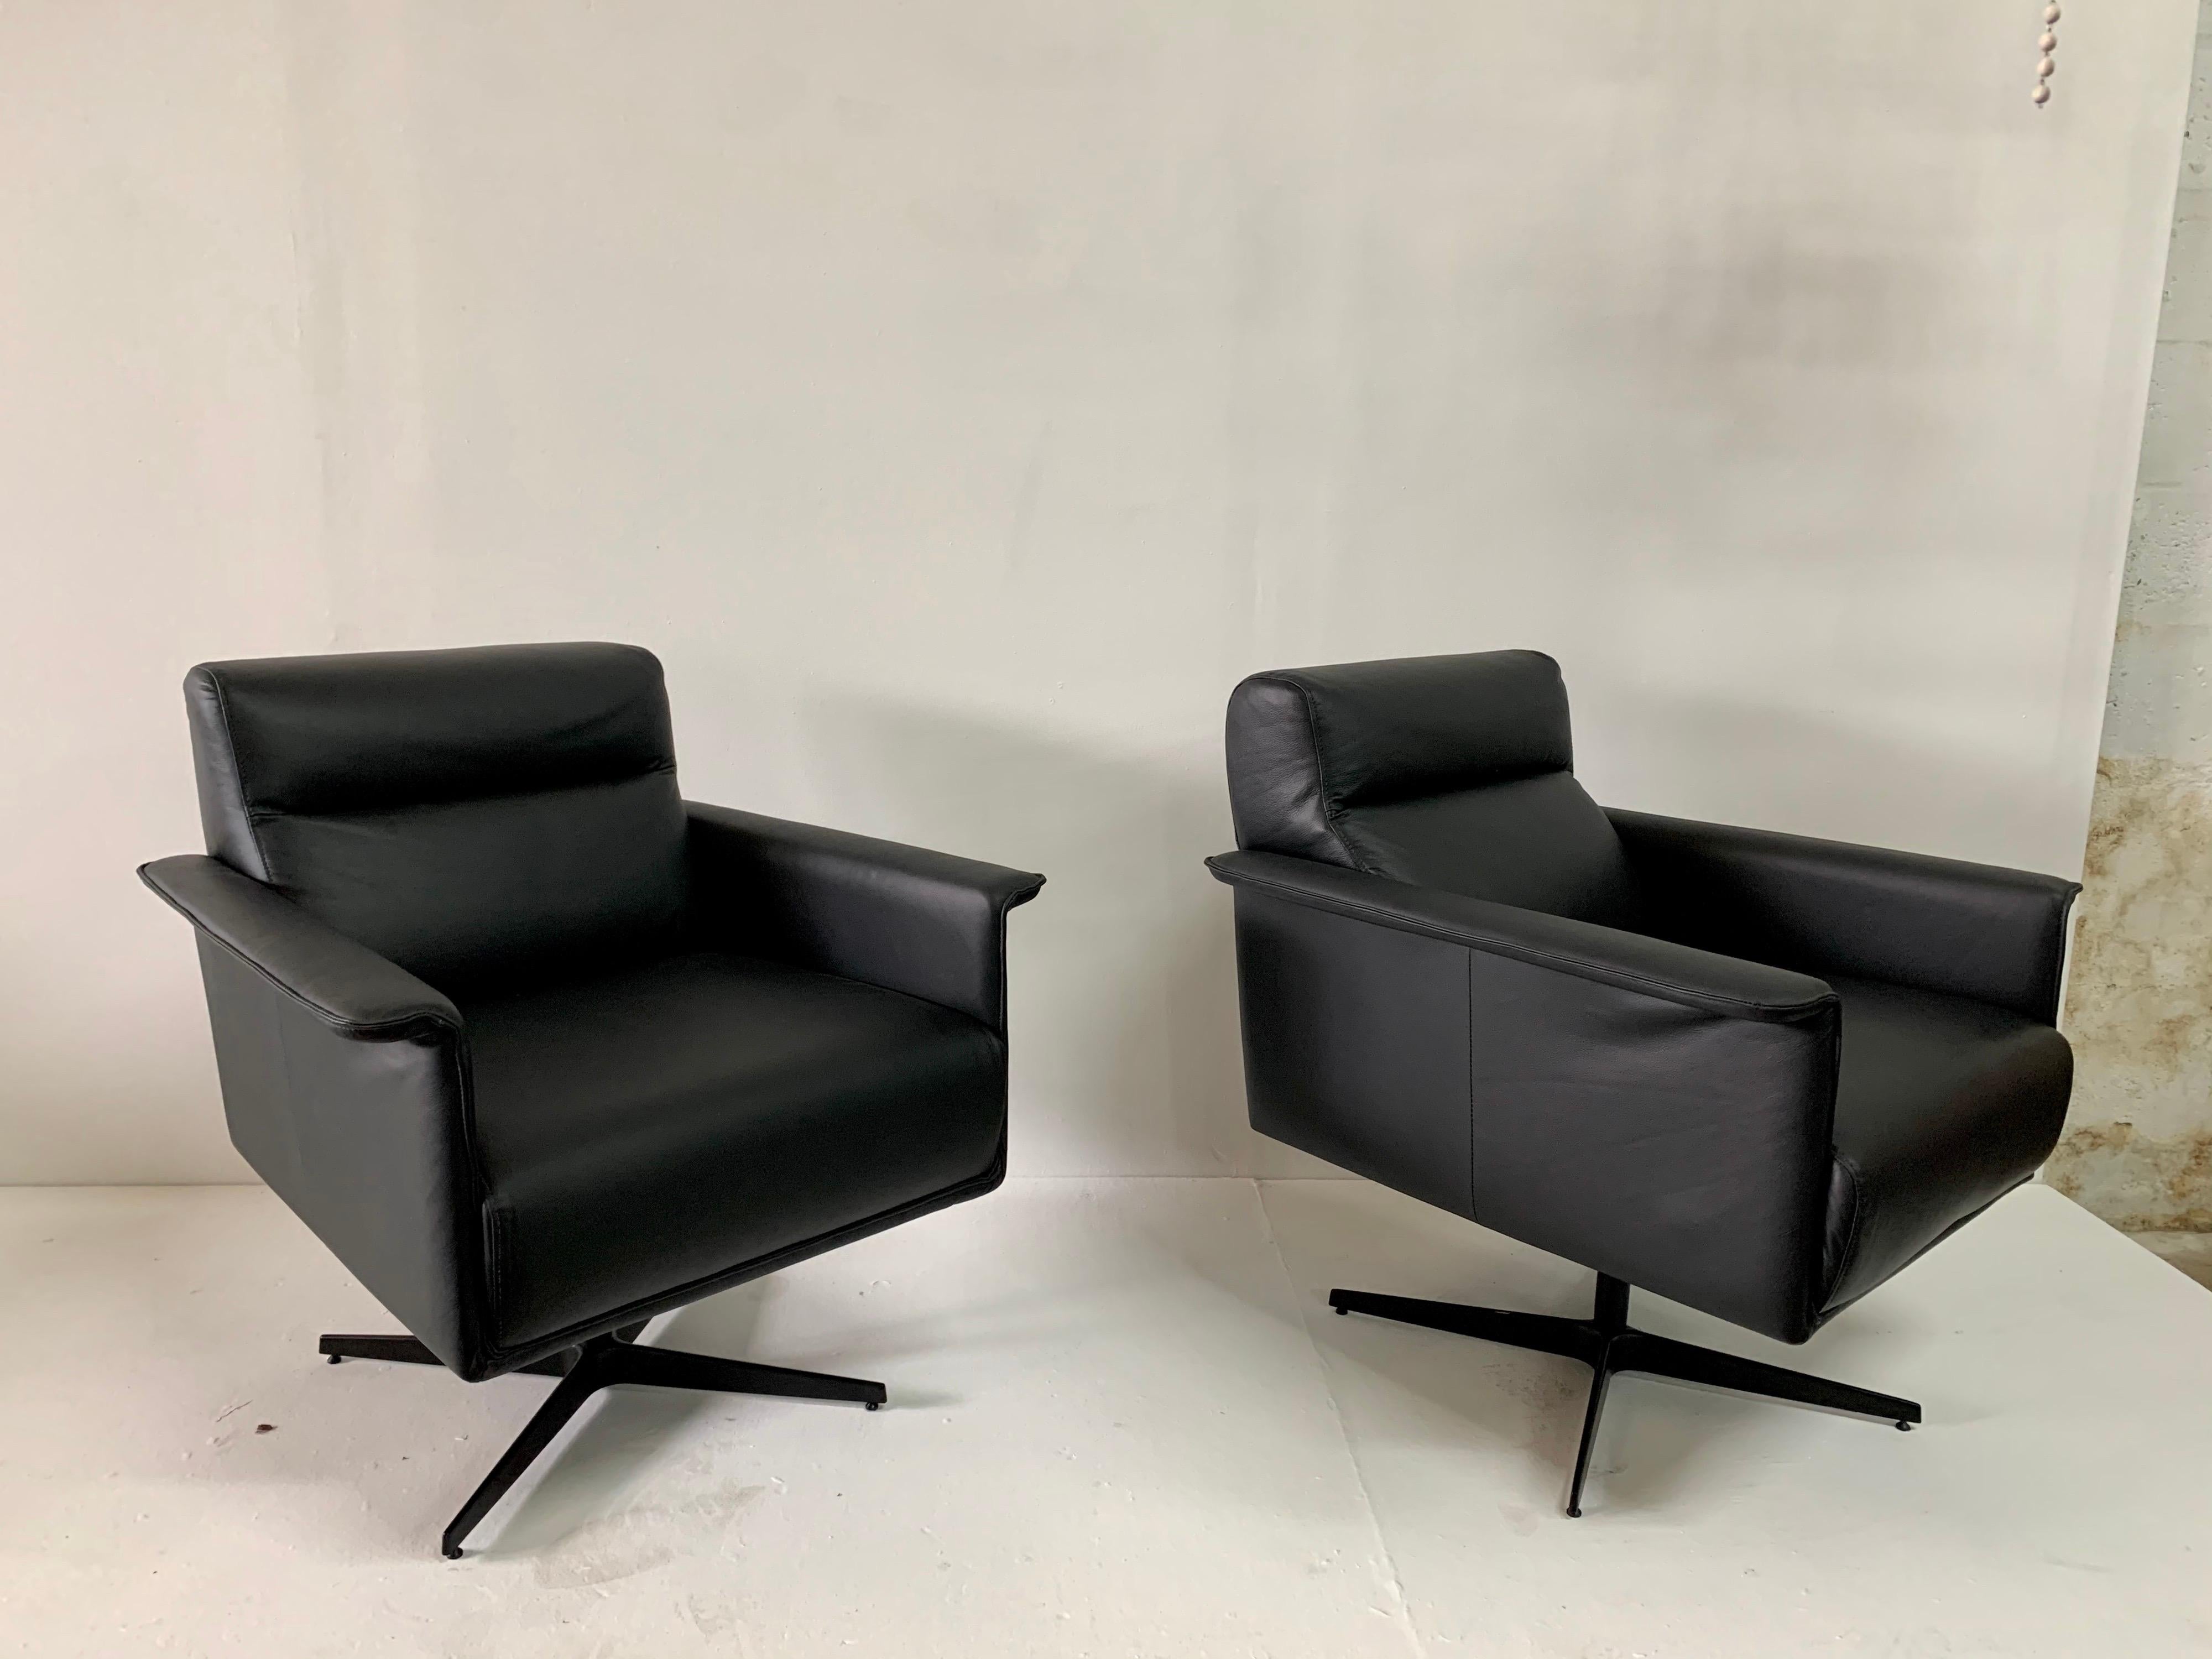 Italian Leather Swivel Chairs, Pair 1